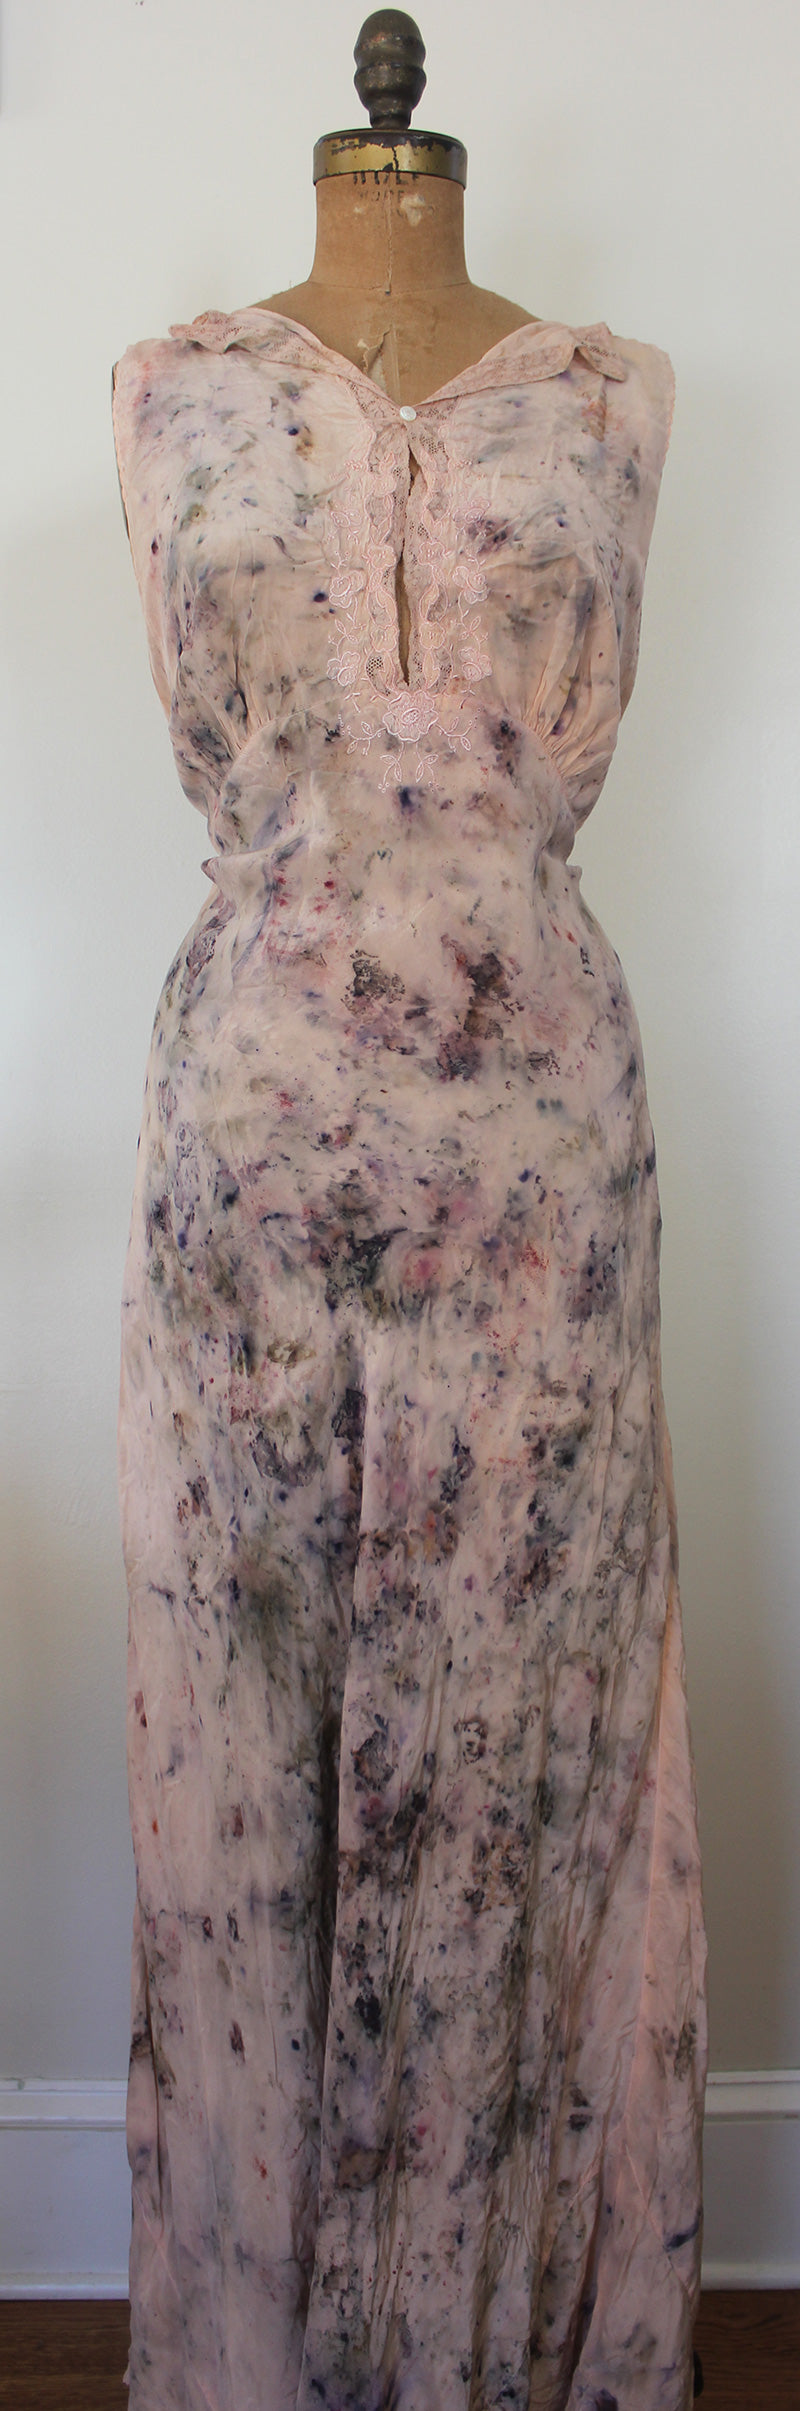 Plant dyed silk 1930's vintage dress